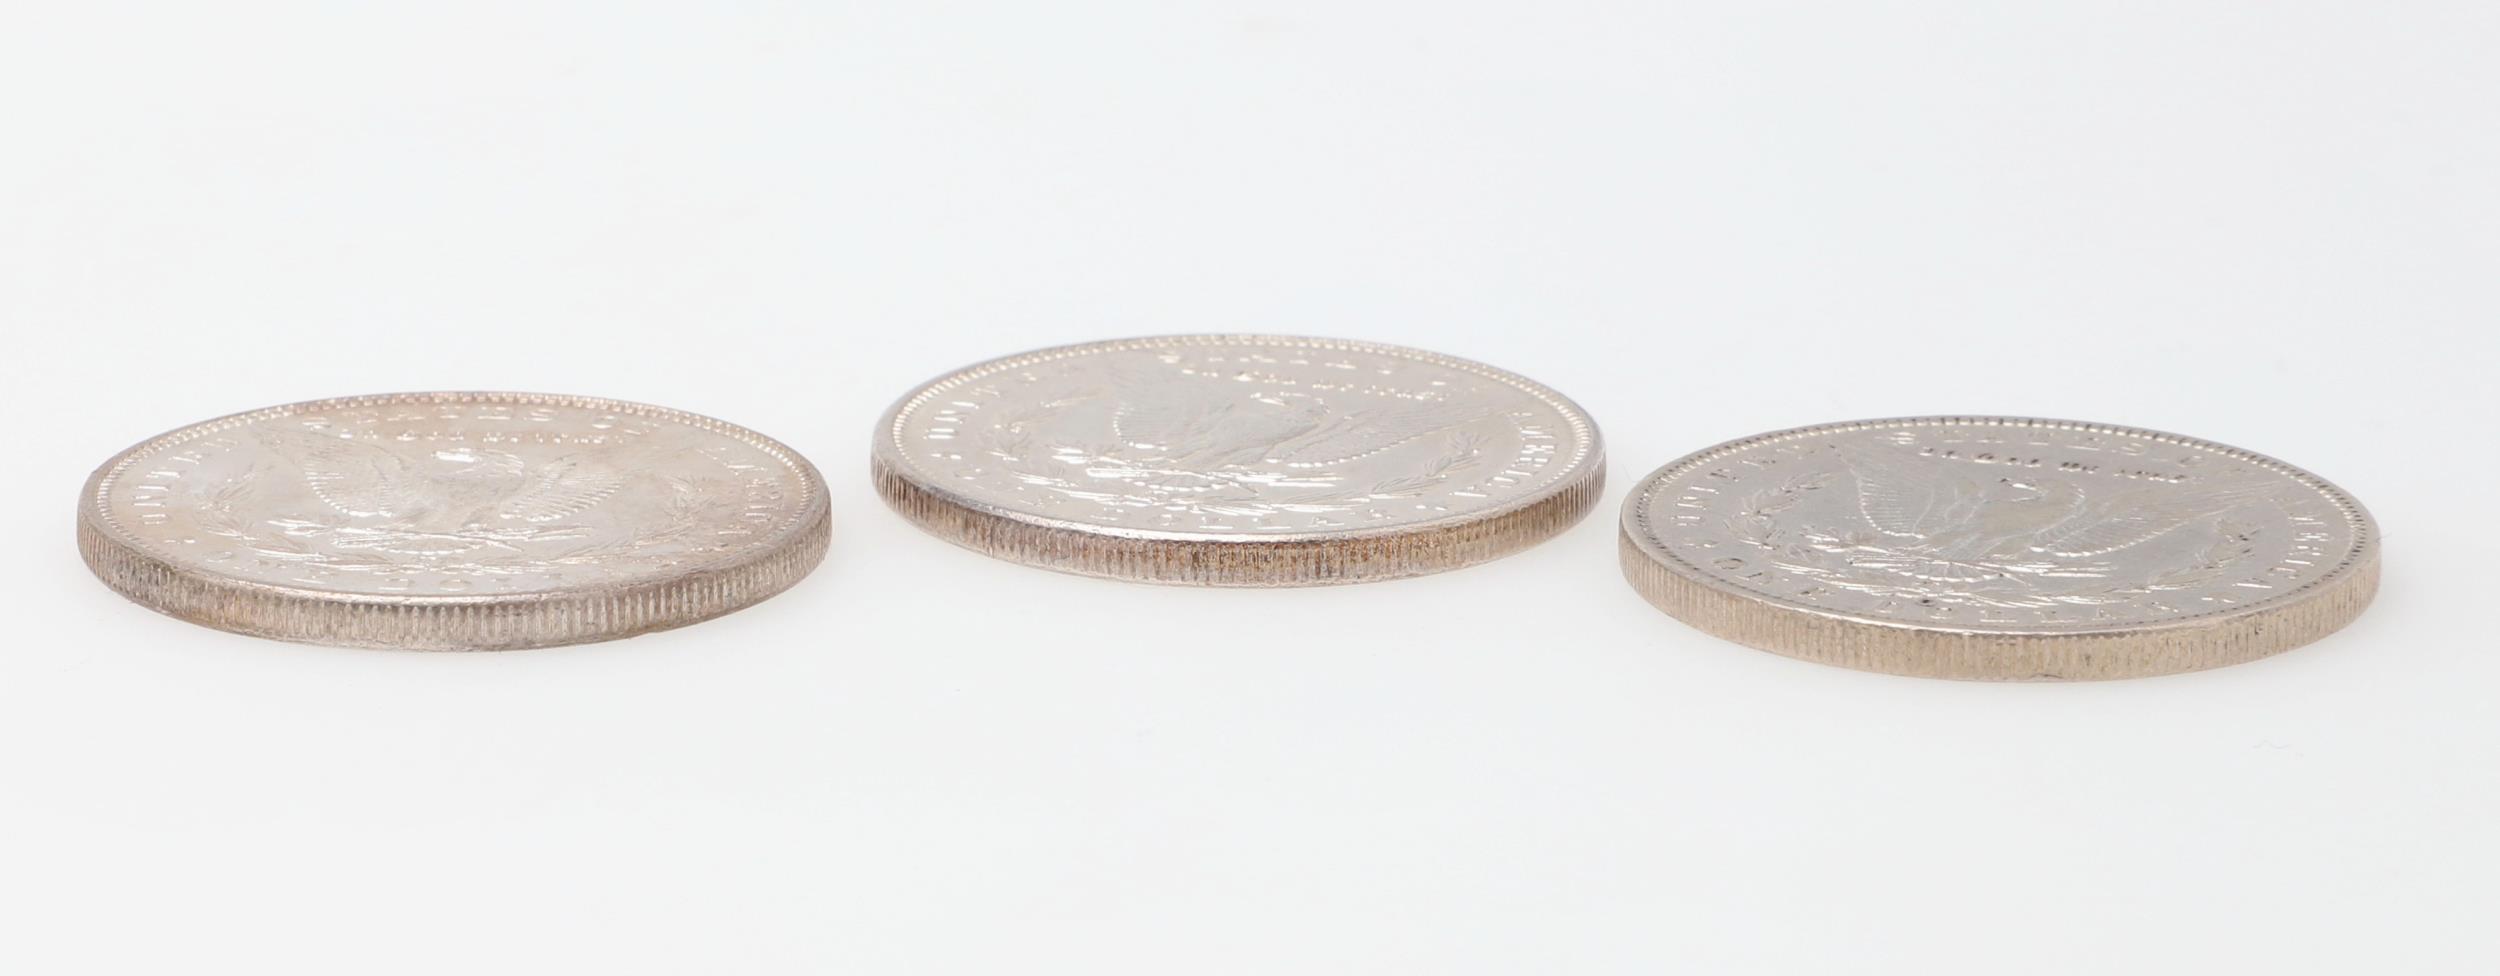 THREE AMERICAN MORGAN DOLLARS, 1879 AND LATER. - Image 3 of 3